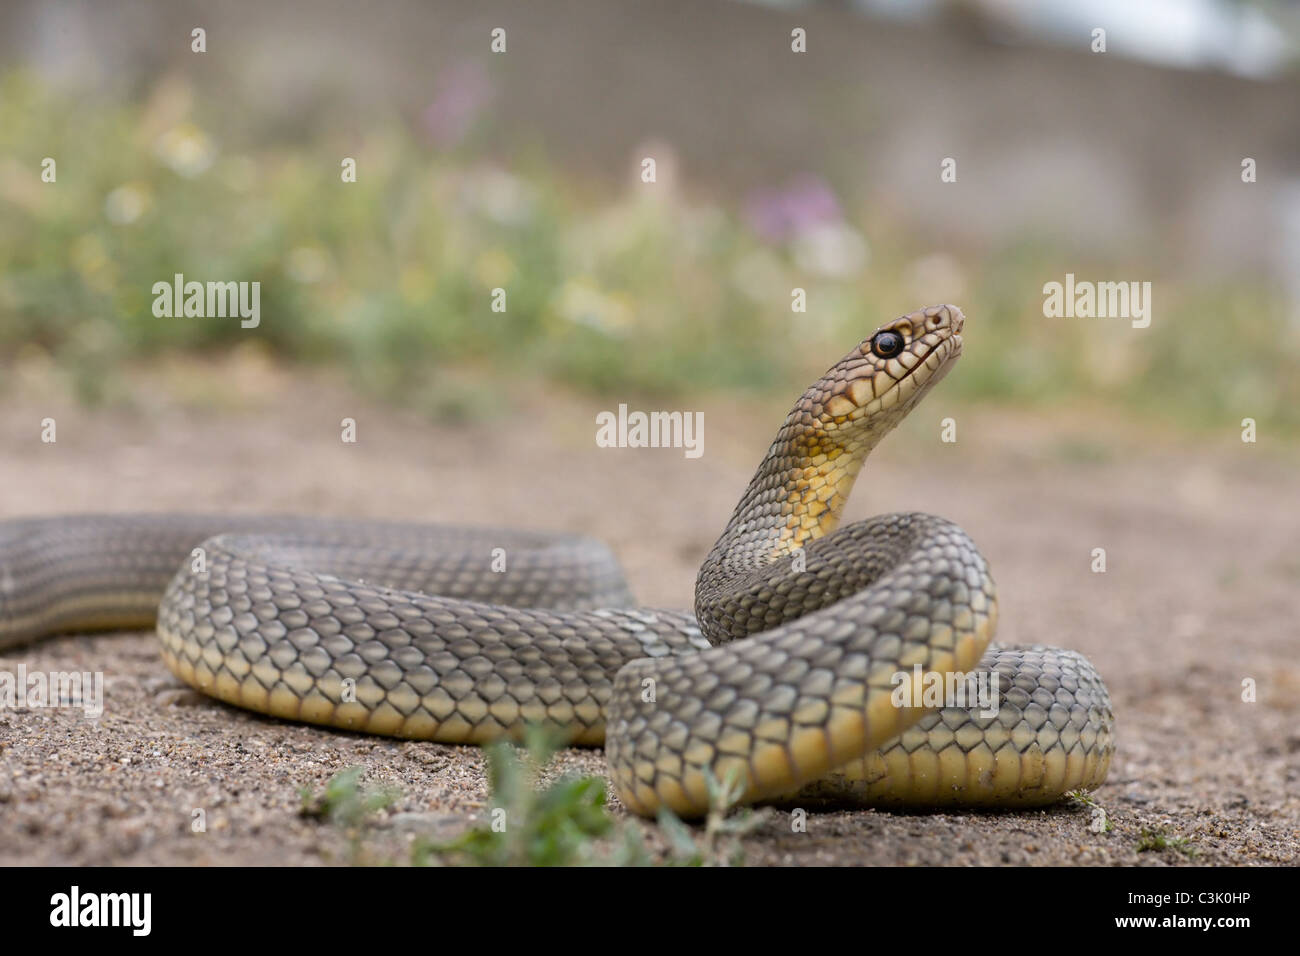 Kaspische Pfeilnatter, Kaspische Springnatter, Coluber caspius, Dolichophis caspius, Caspian Whip Snake, Bulgarien, Bulgaria Stock Photo